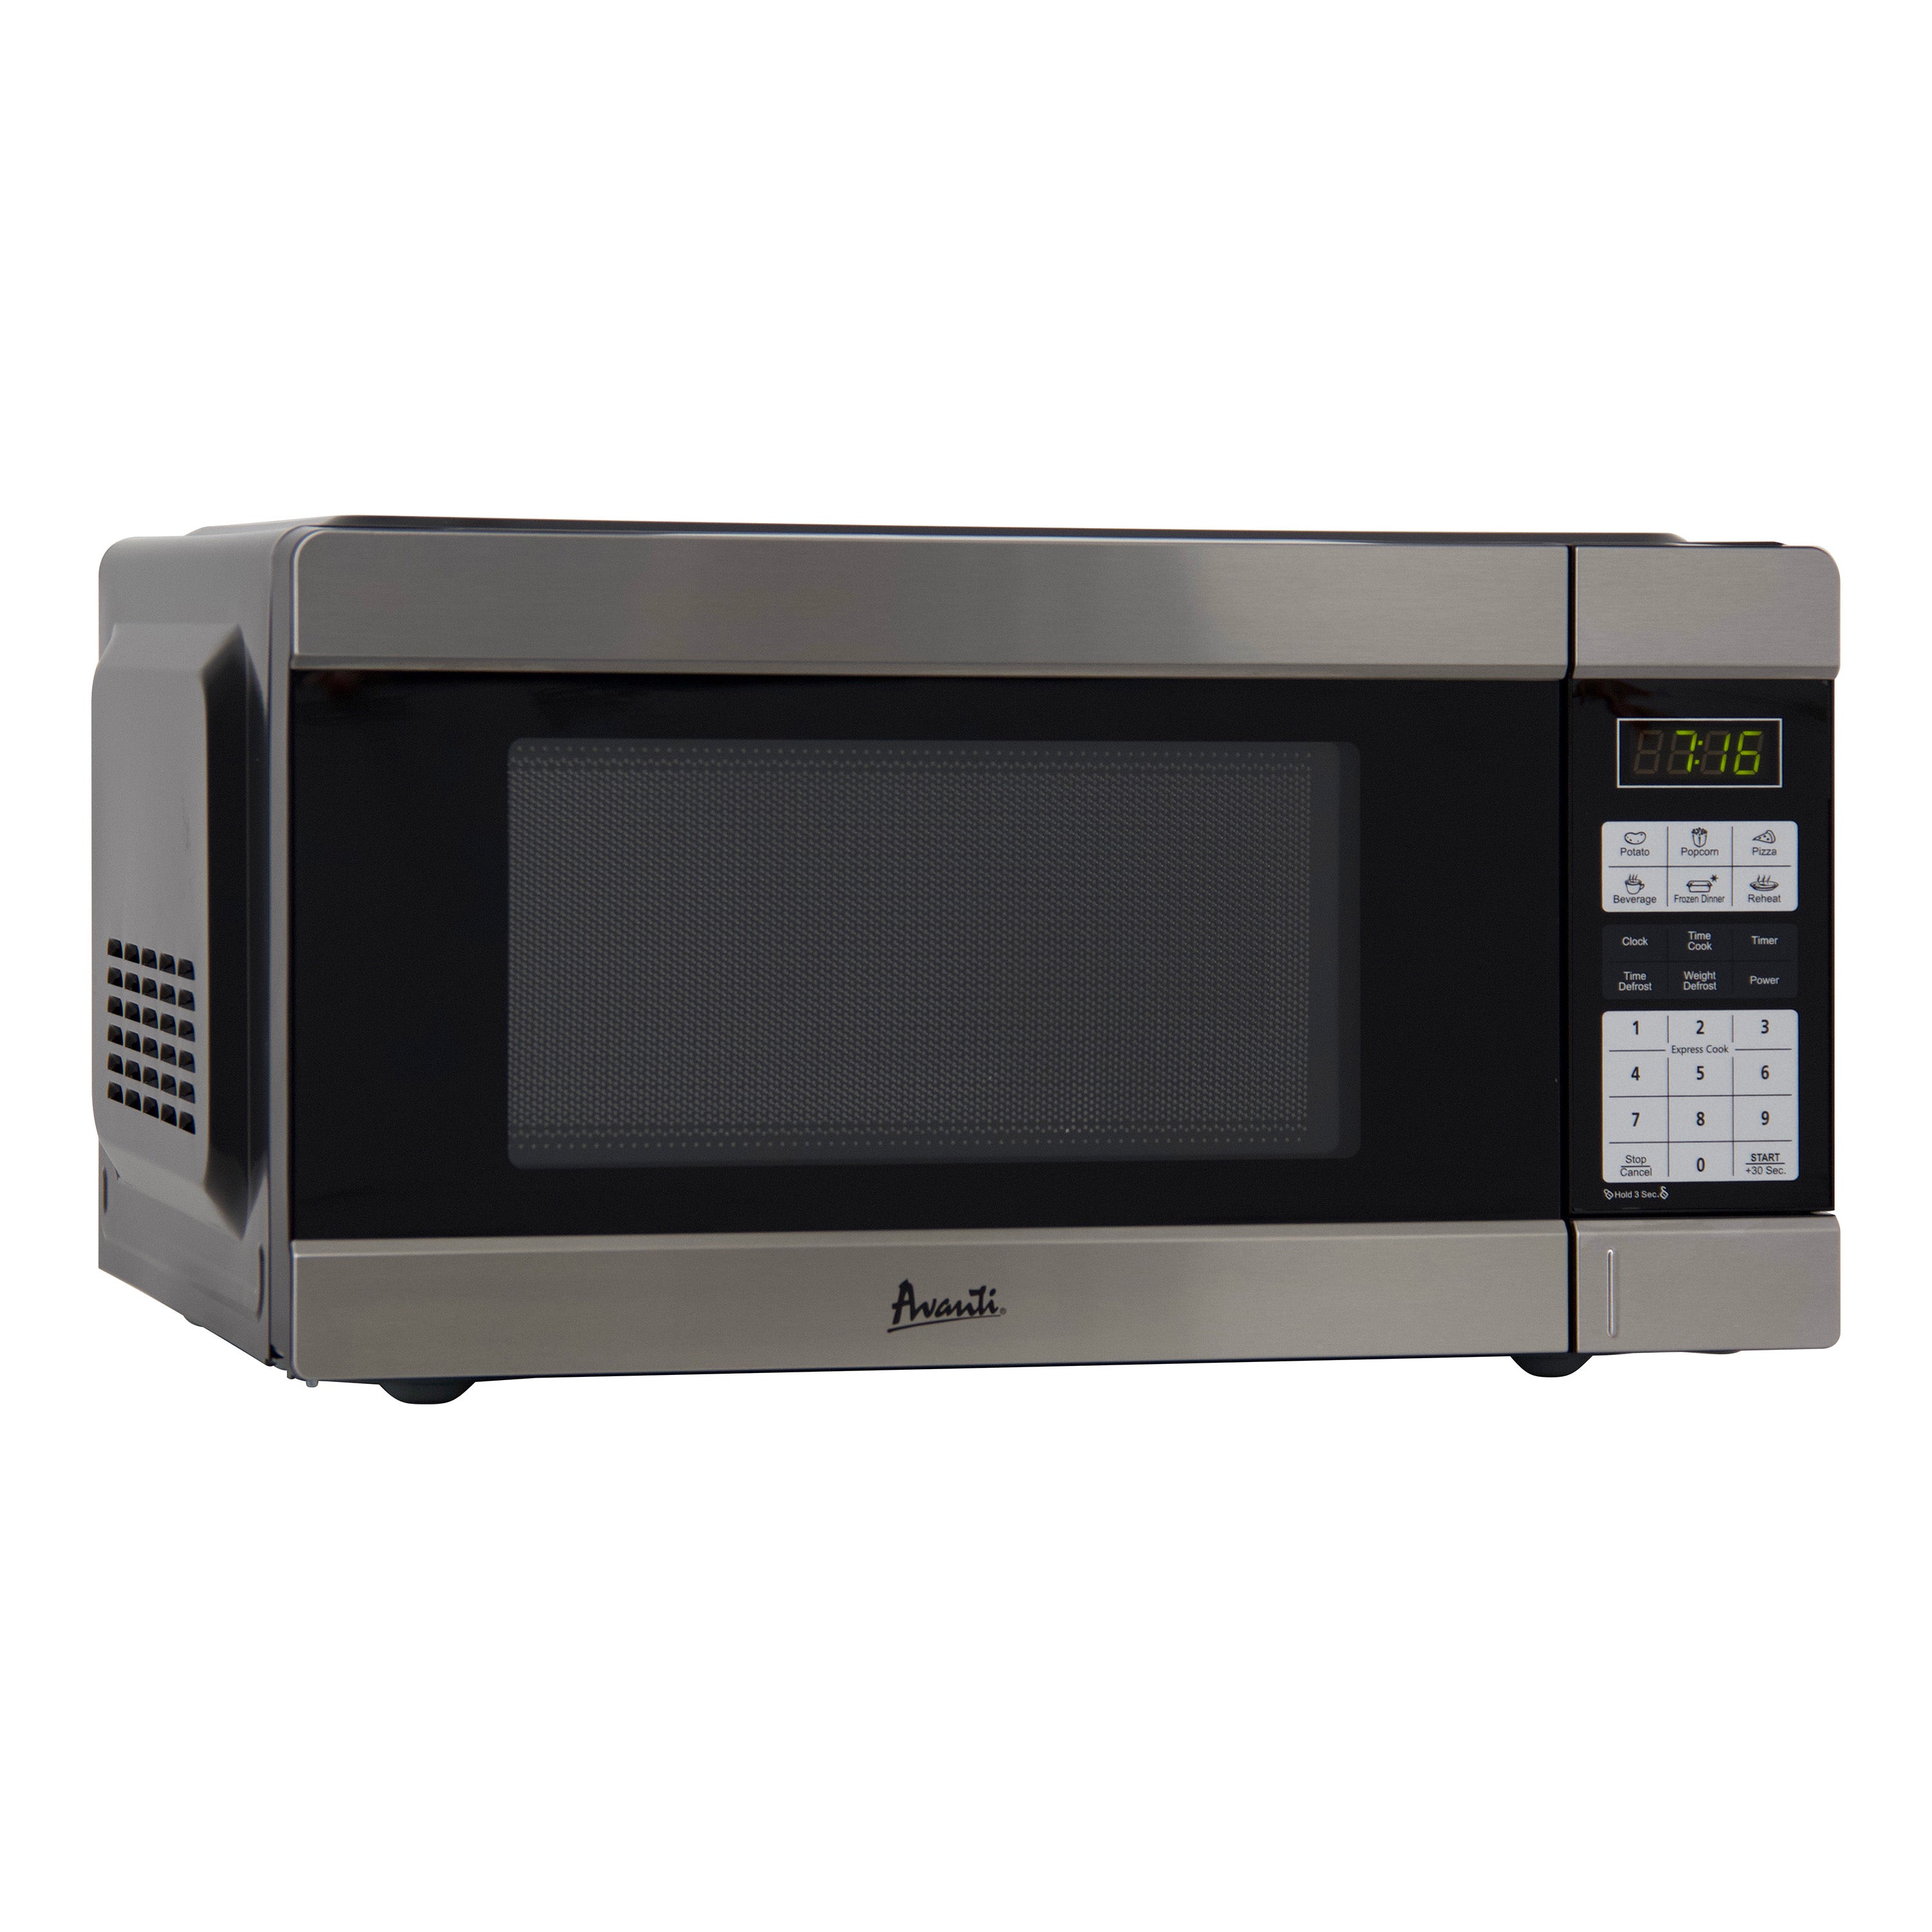 Avanti - MT113K3S, Avanti Countertop Microwave Oven, 1.1 cu. ft., in Stainless Steel